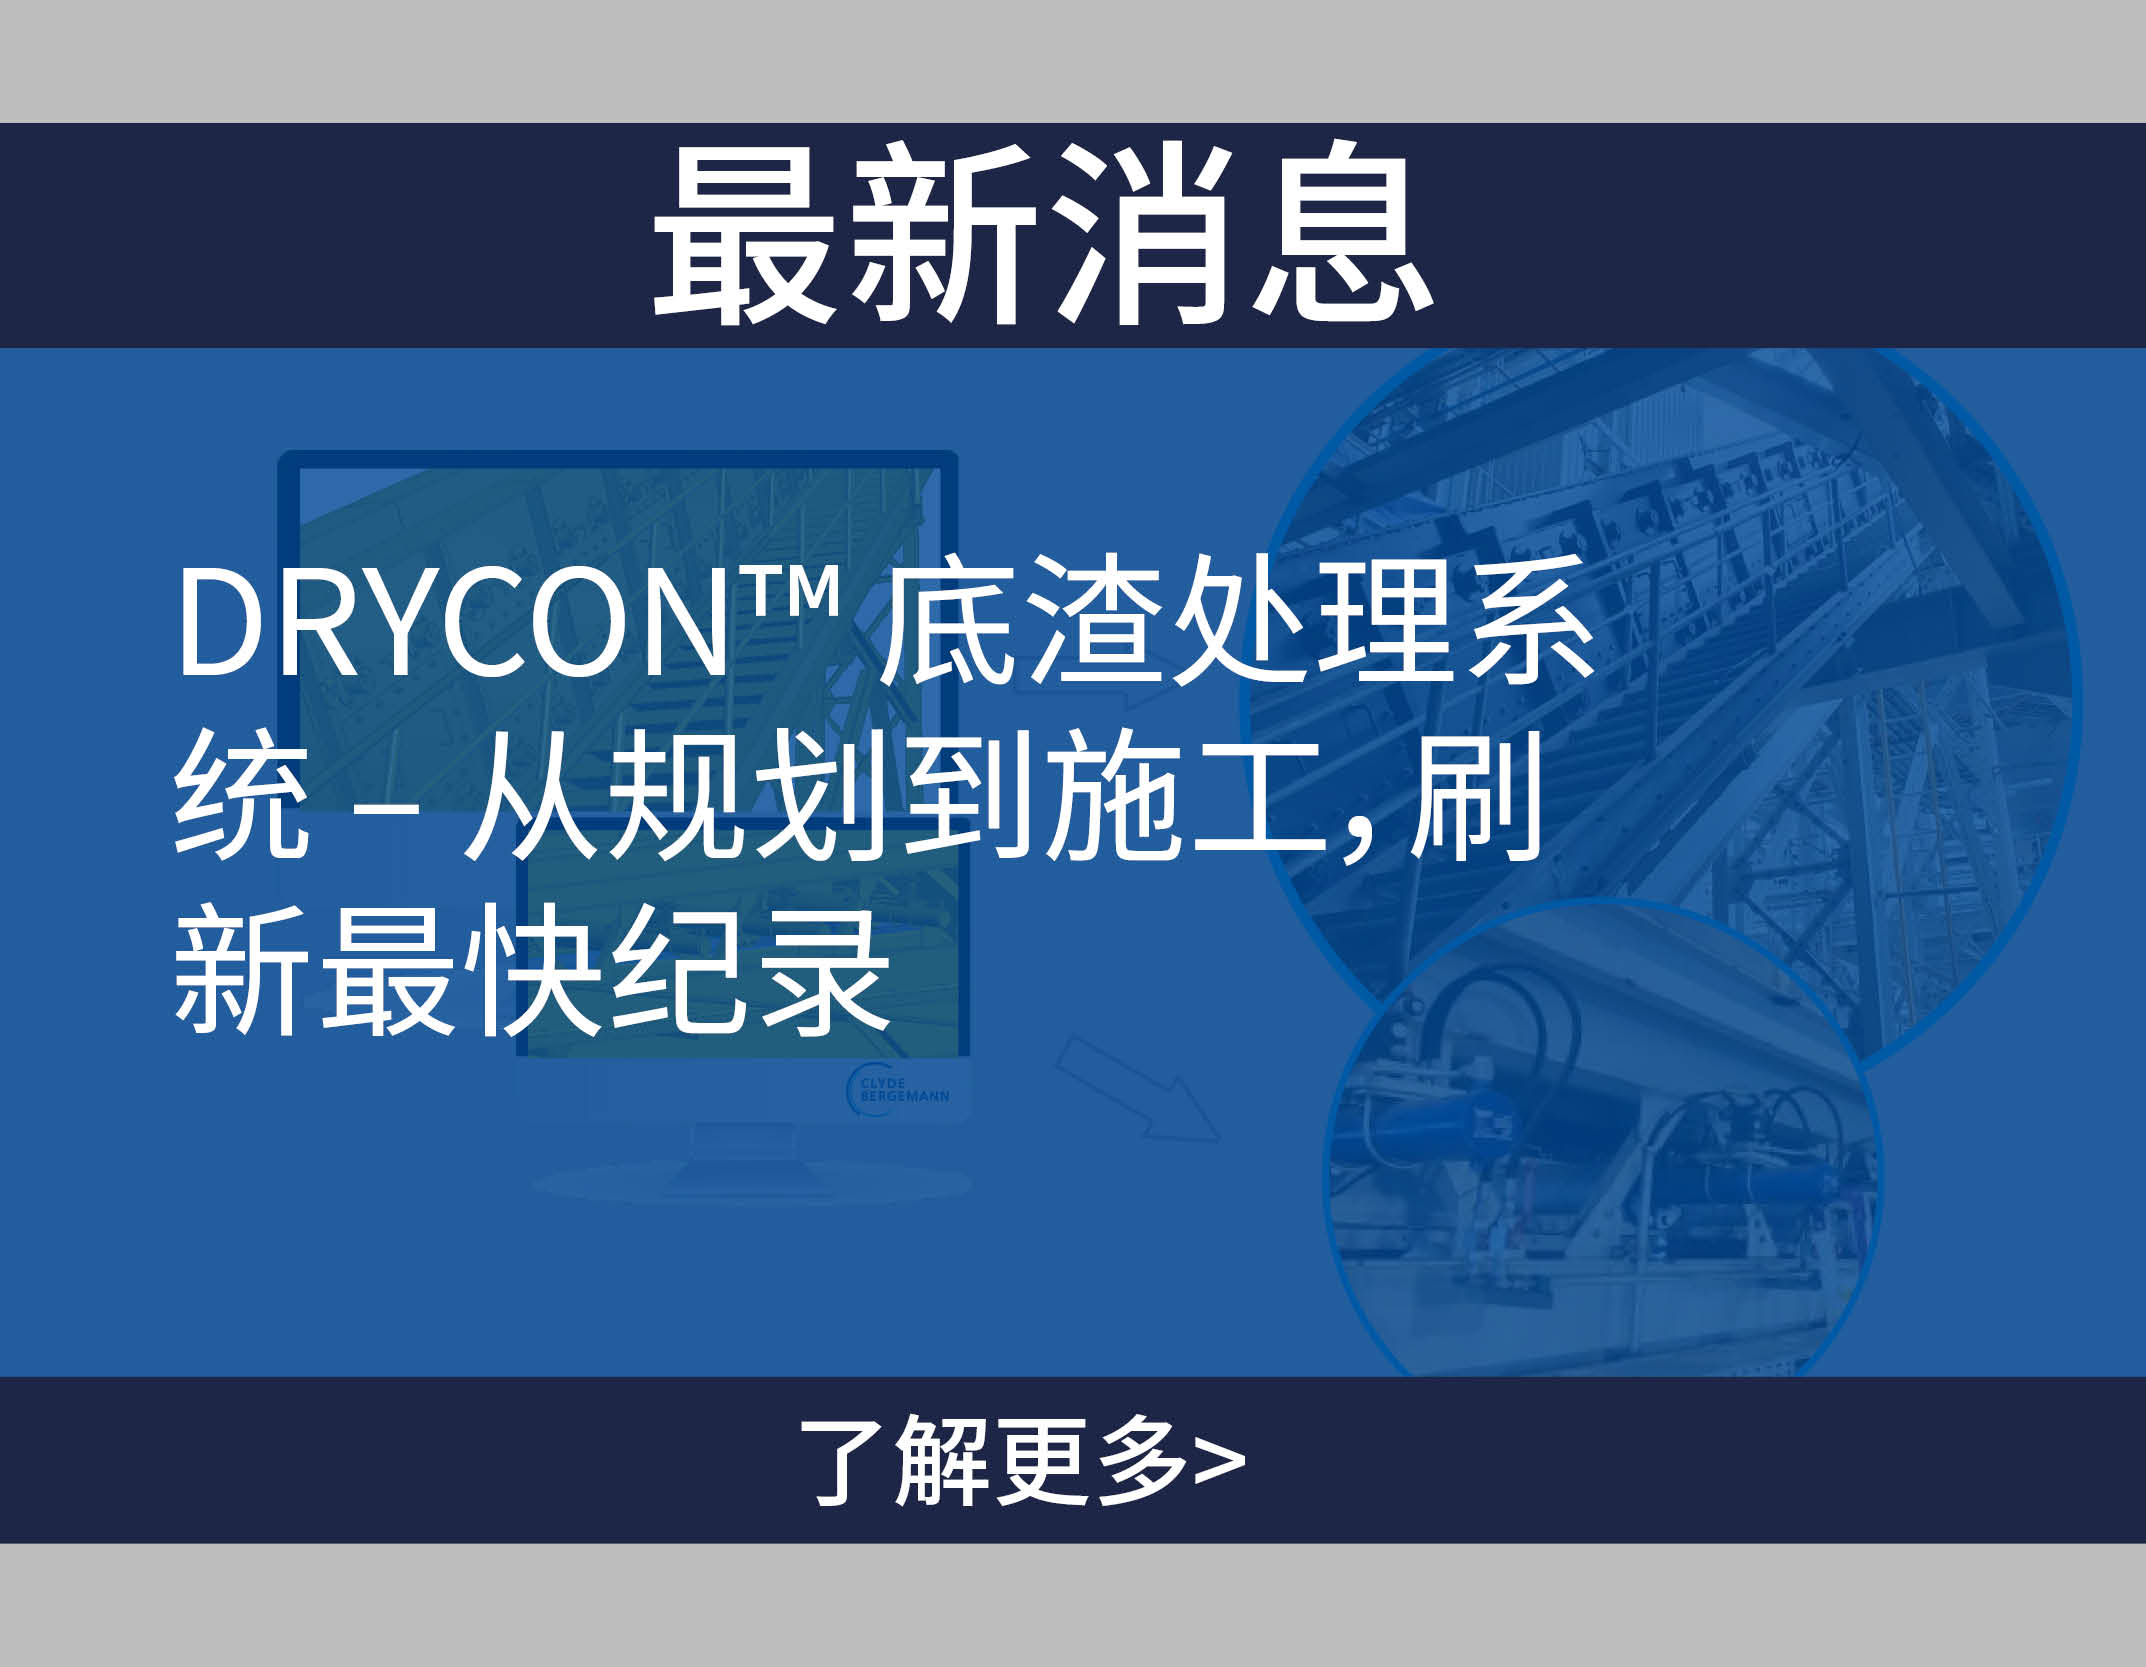 DRYCON™ 底渣处理系统 – 从规划到施工，刷新最快纪录